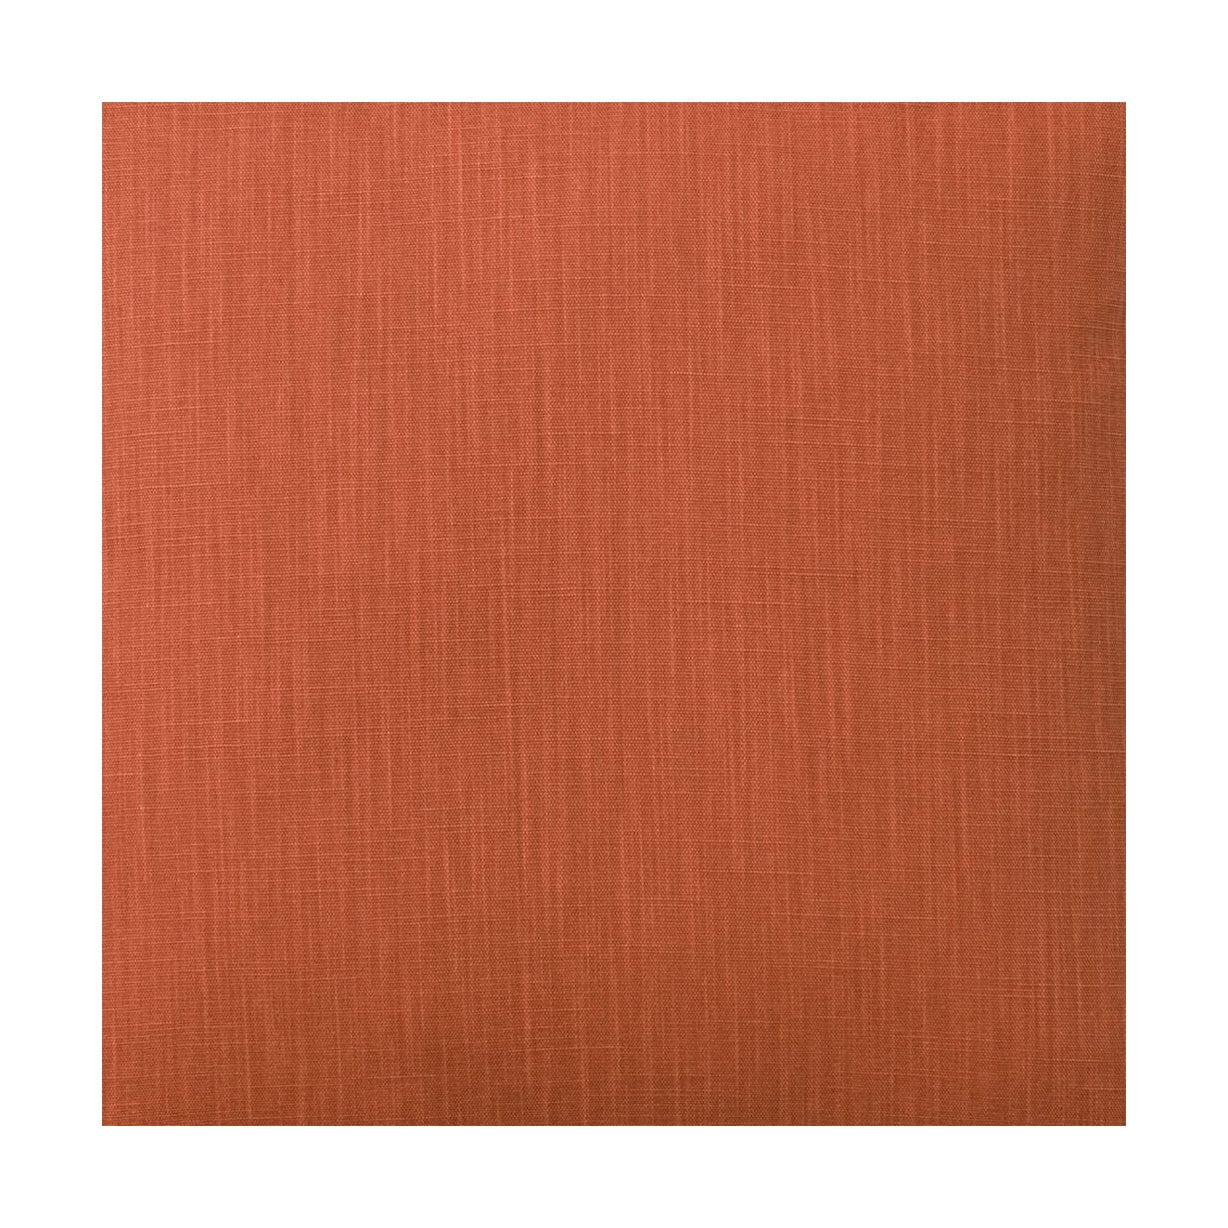 Spira Klotz Fabric Width 150 Cm (Price Per Meter), Terracotta